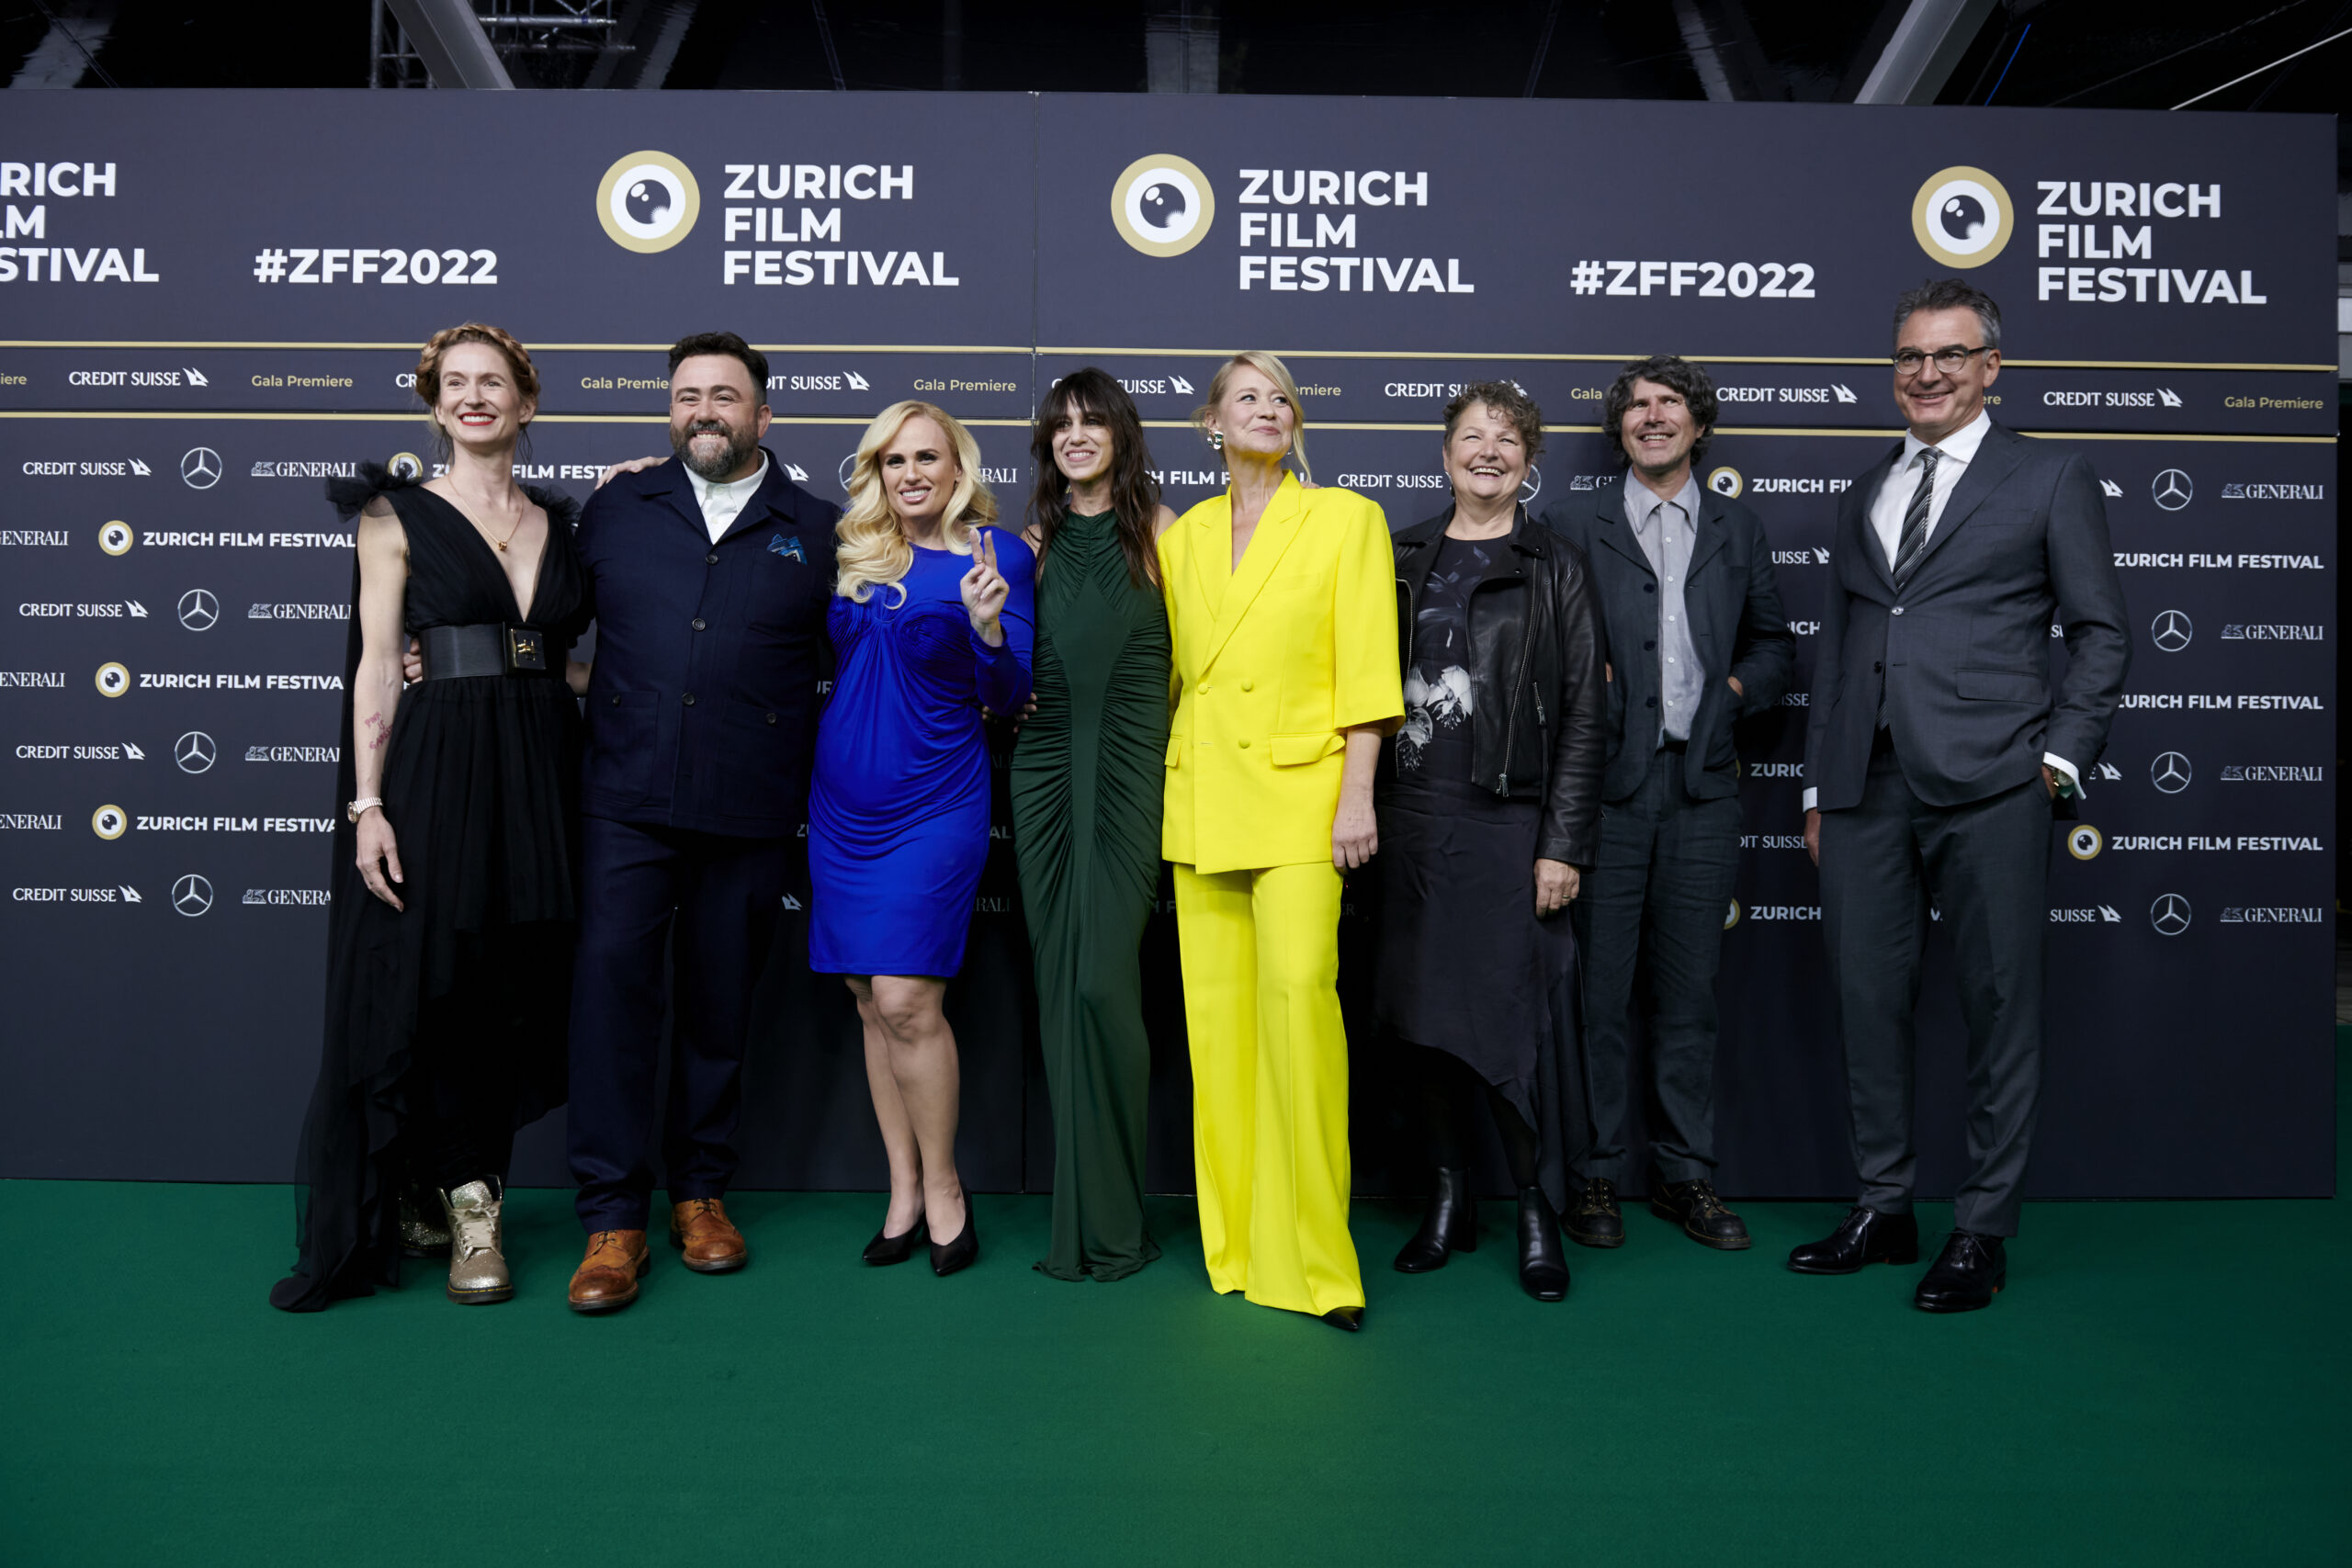 Diane Kruger to receive Golden Eye Award at Zurich Film Festival